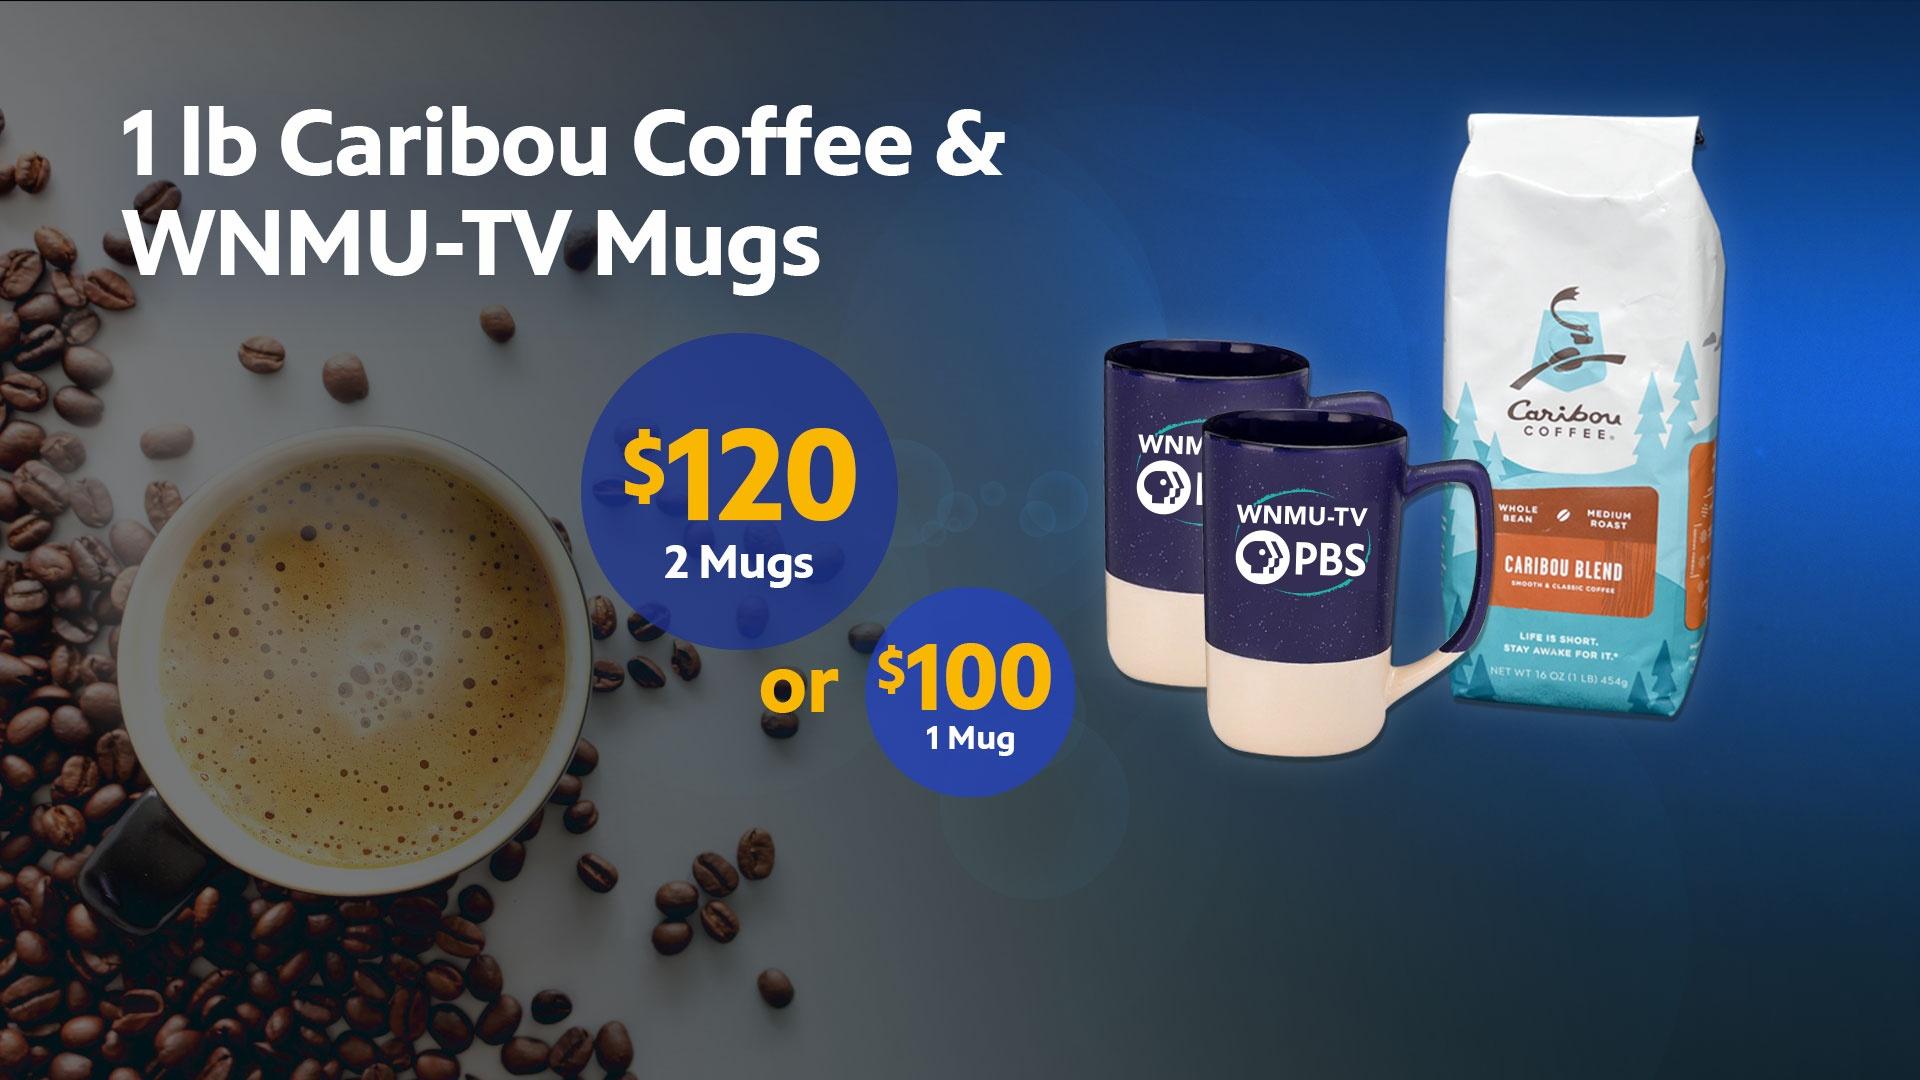 WNMU-TV Mugs and Caribou Coffee